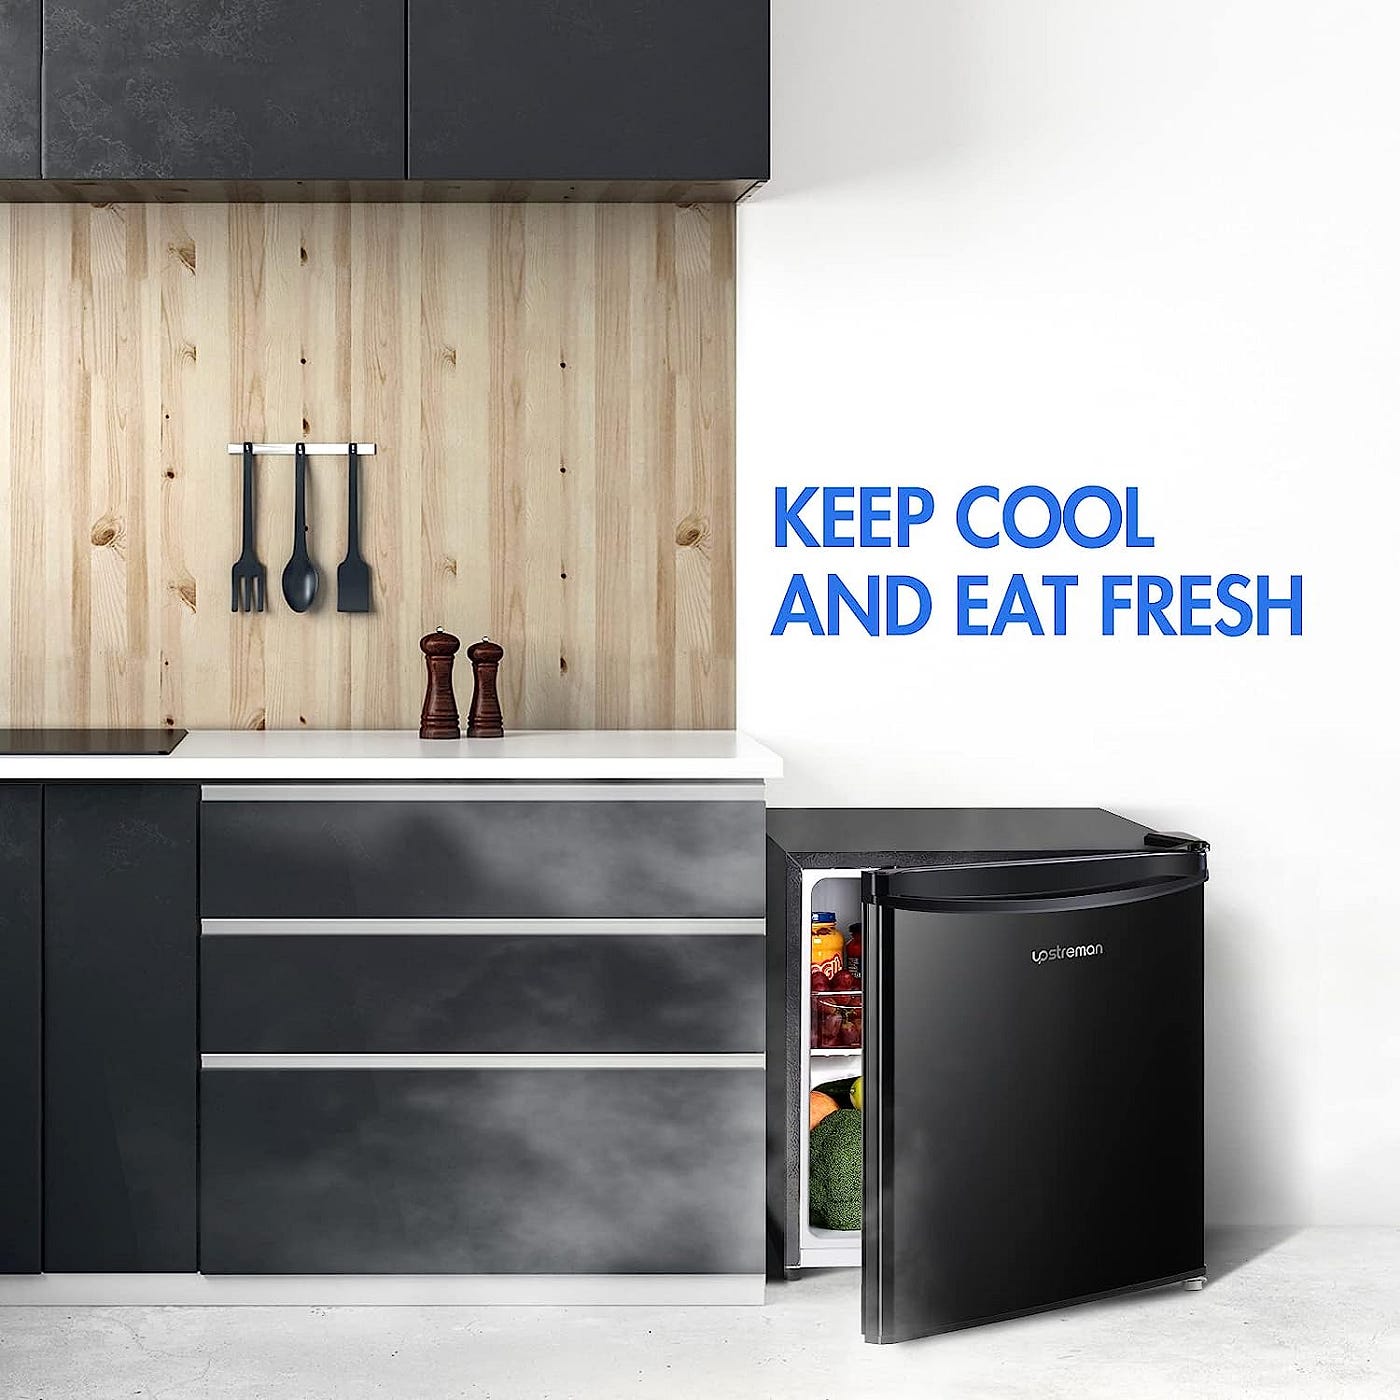 Upstreman 3.2 Cu.Ft Mini Fridge with Freezer, Single Door, Adjustable  Thermostat, Refrigerator for Dorm, Office, Bedroom, Black-BR321